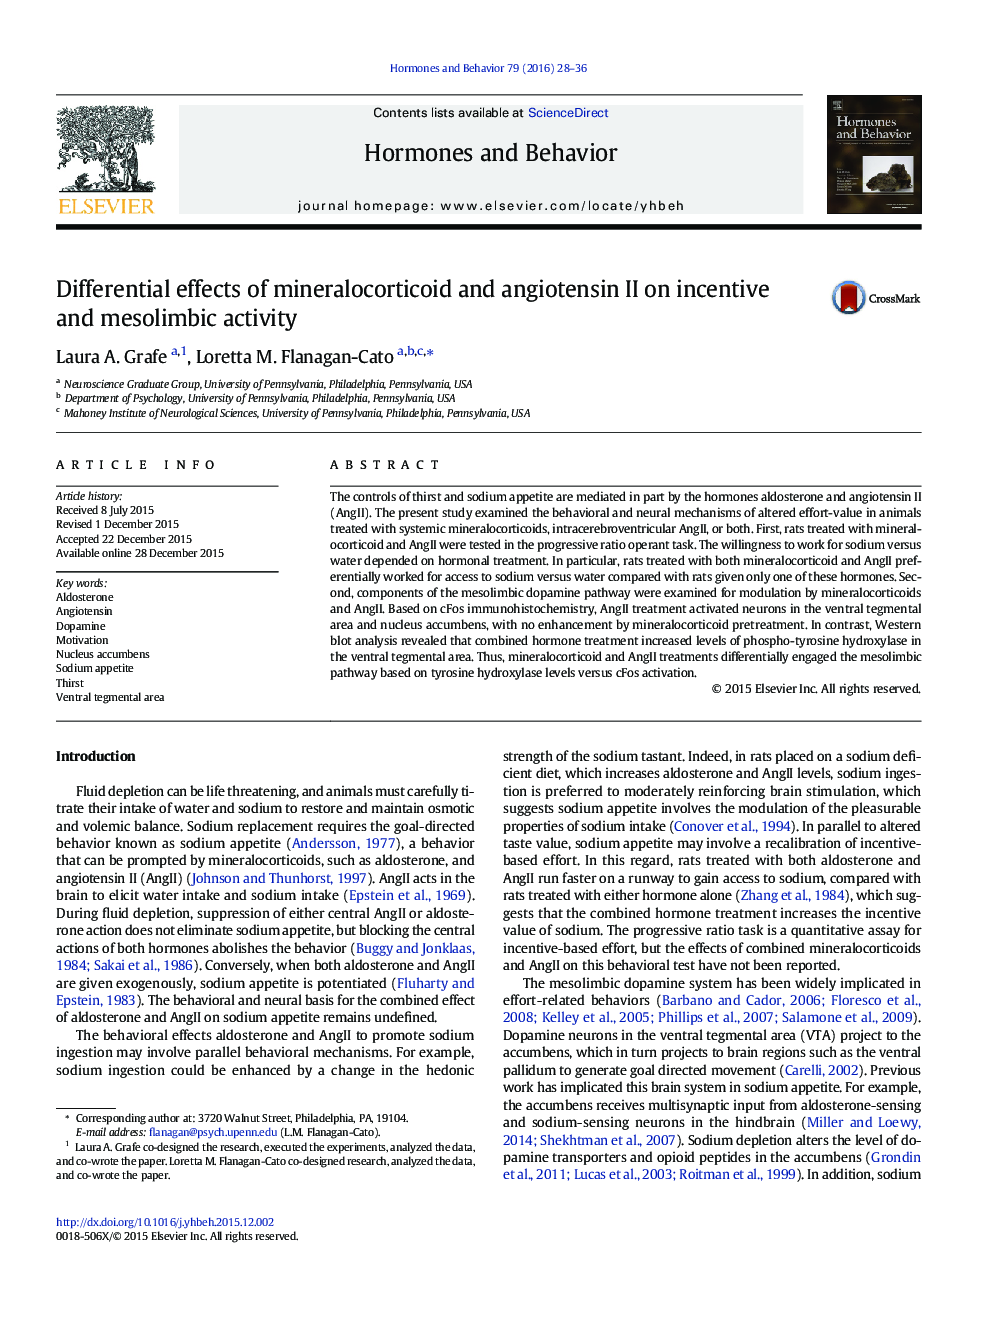 اثر متفاوت مینرالوکورتیکوئیدها و آنژیوتانسین II بر انگیزه و فعالیت مزولیمبیک